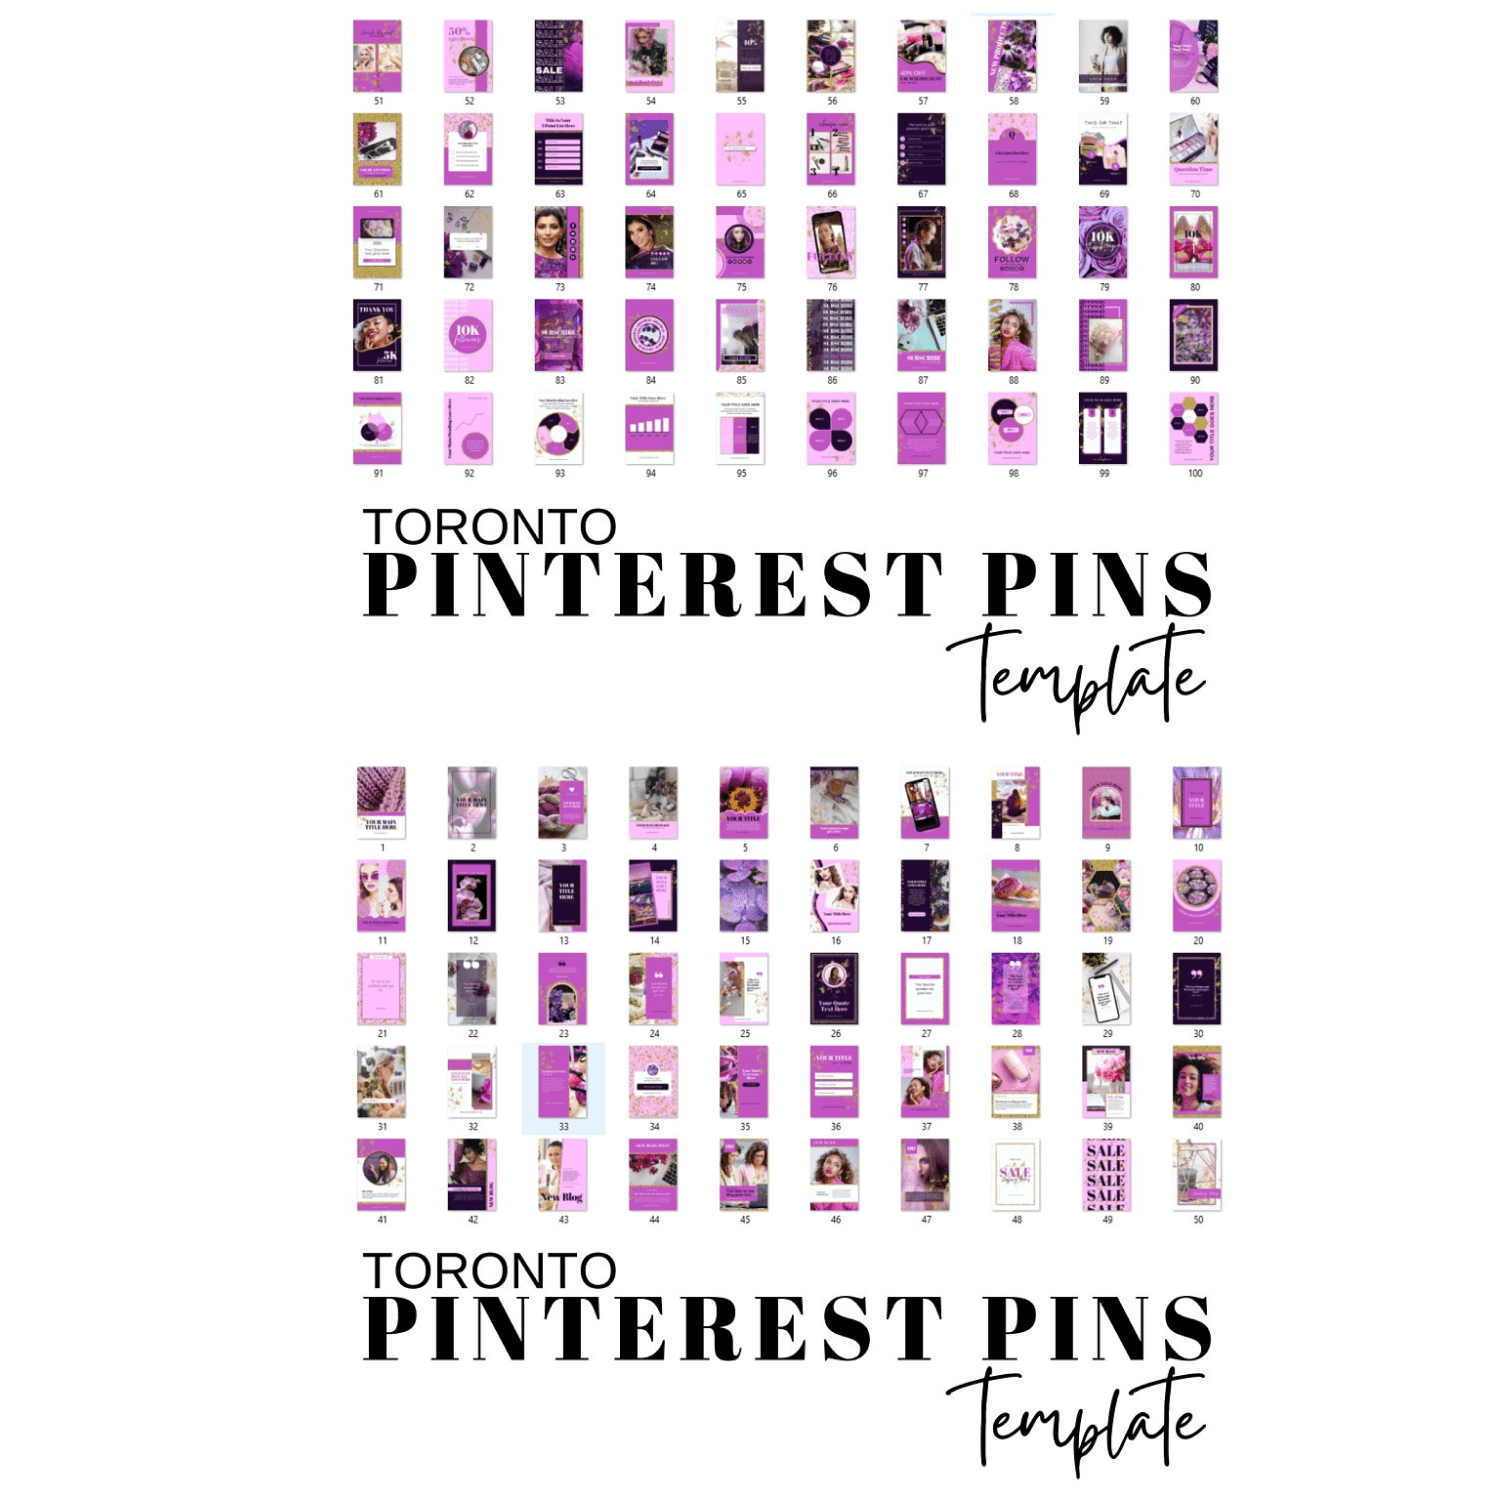 Pinterest pins canva templates created by Jennifer Magri Templates.